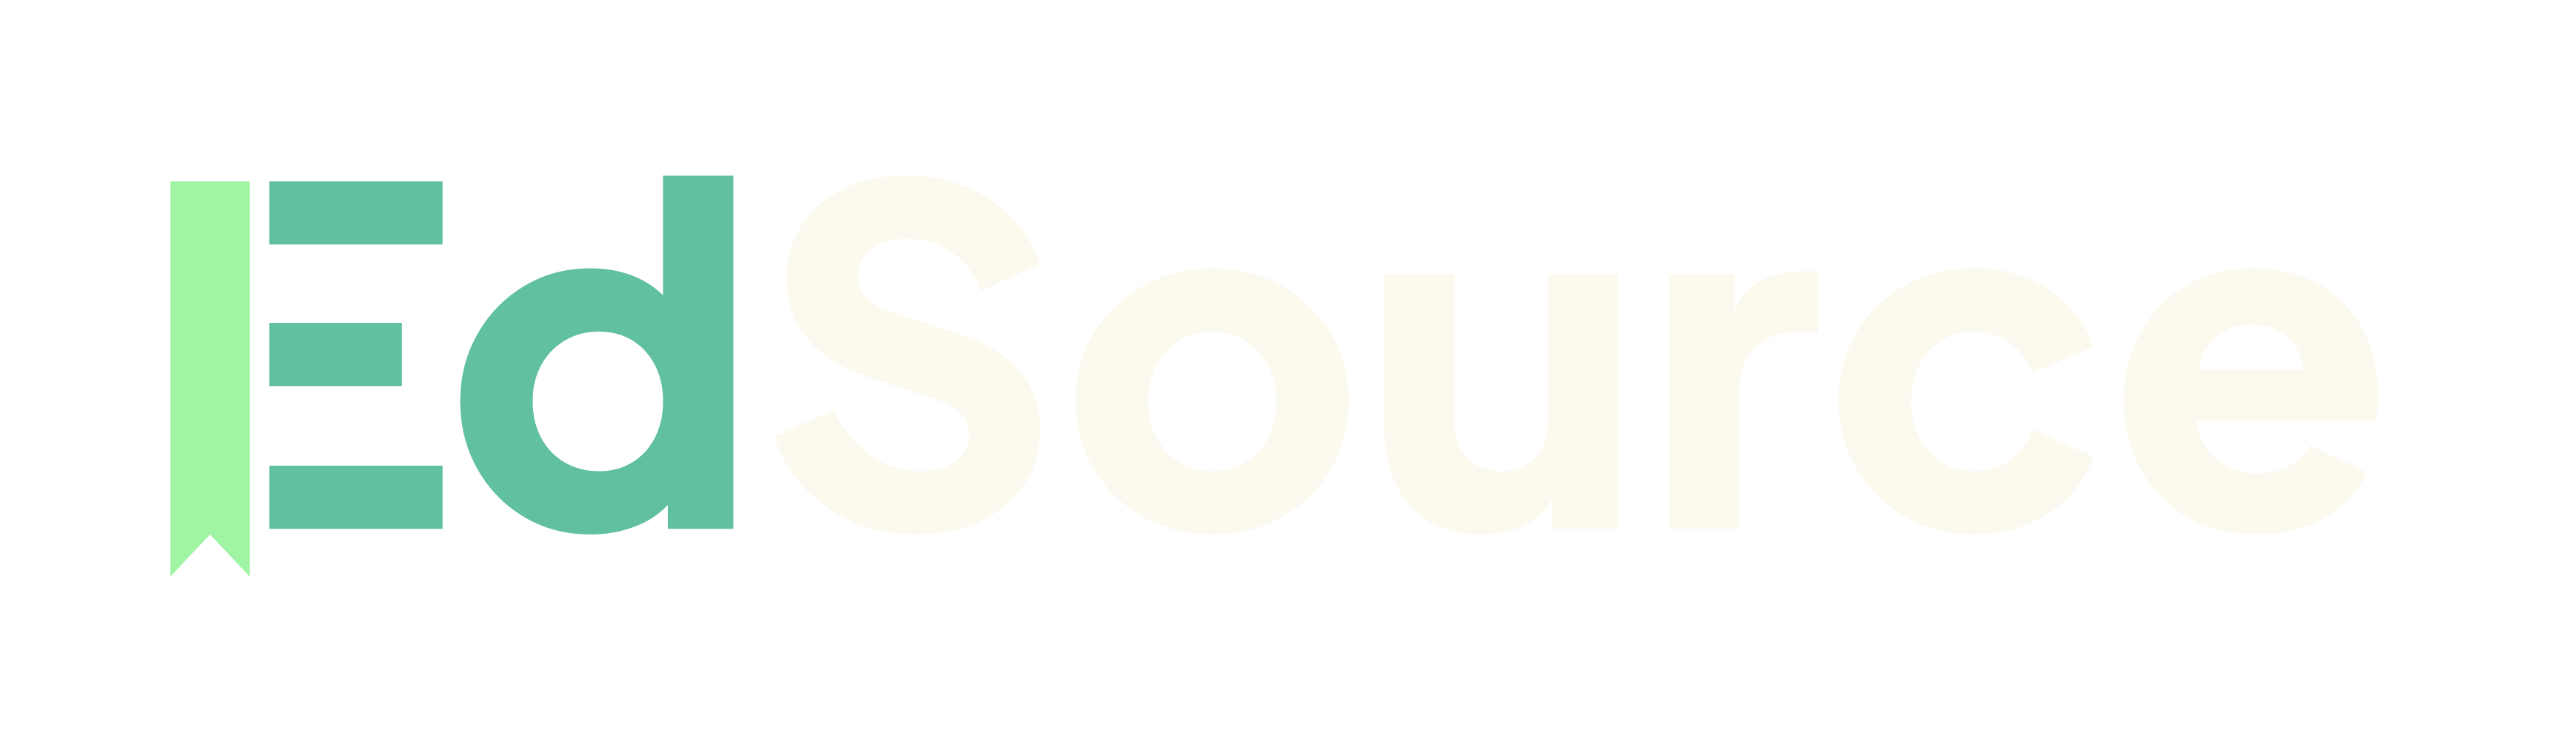 EdSource logo